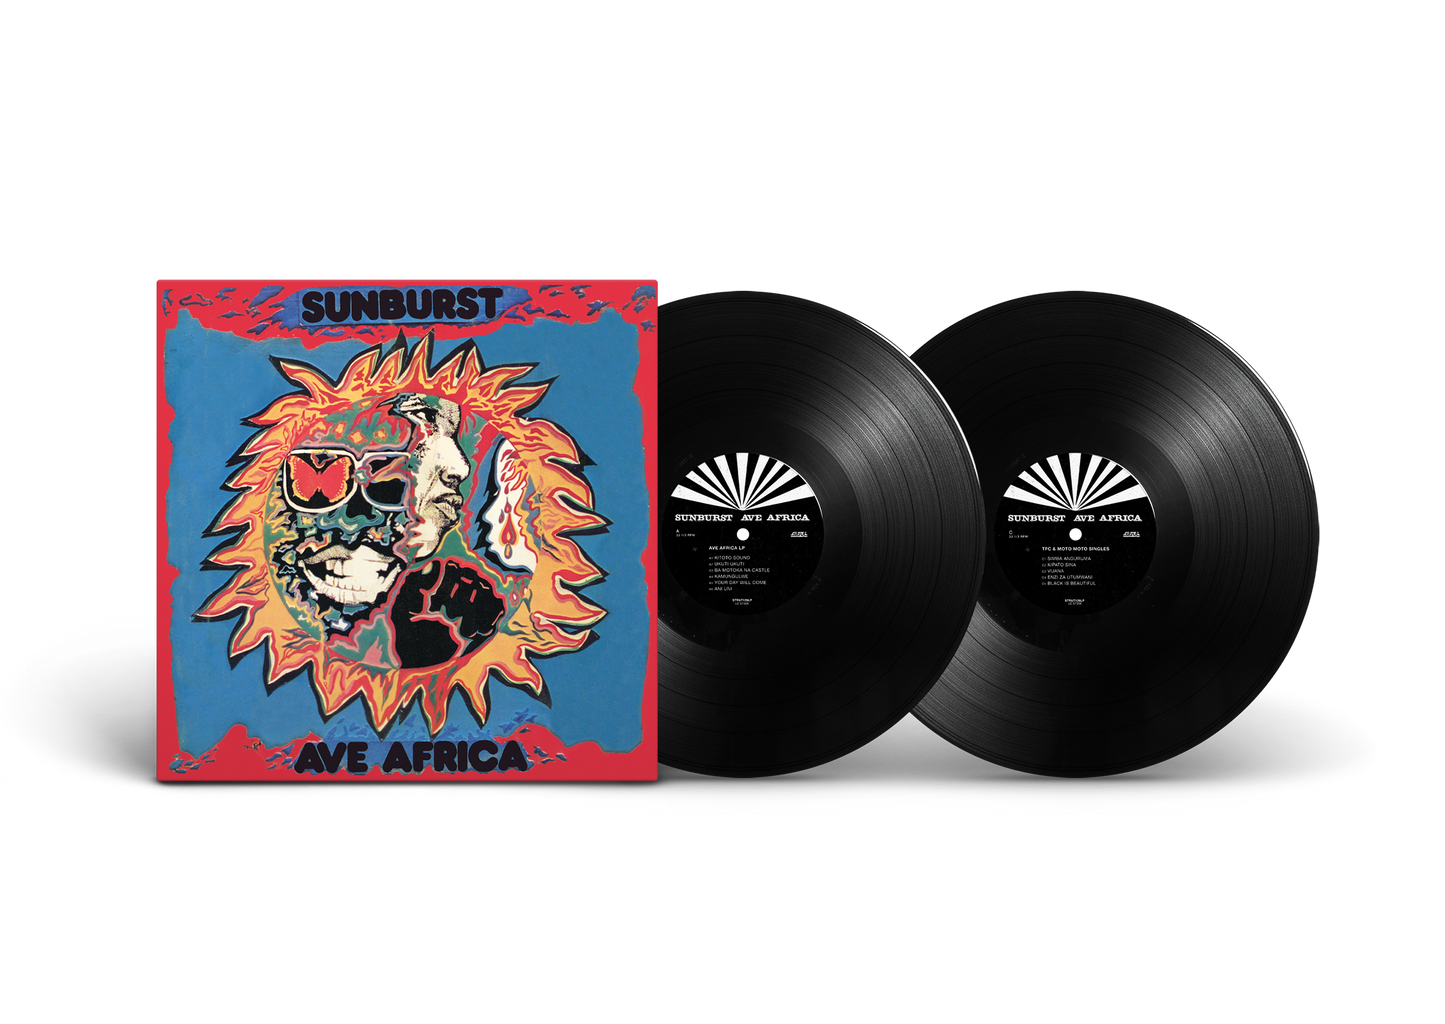 Sunburst - Ave Africa: The Complete Recordings 1973-1976